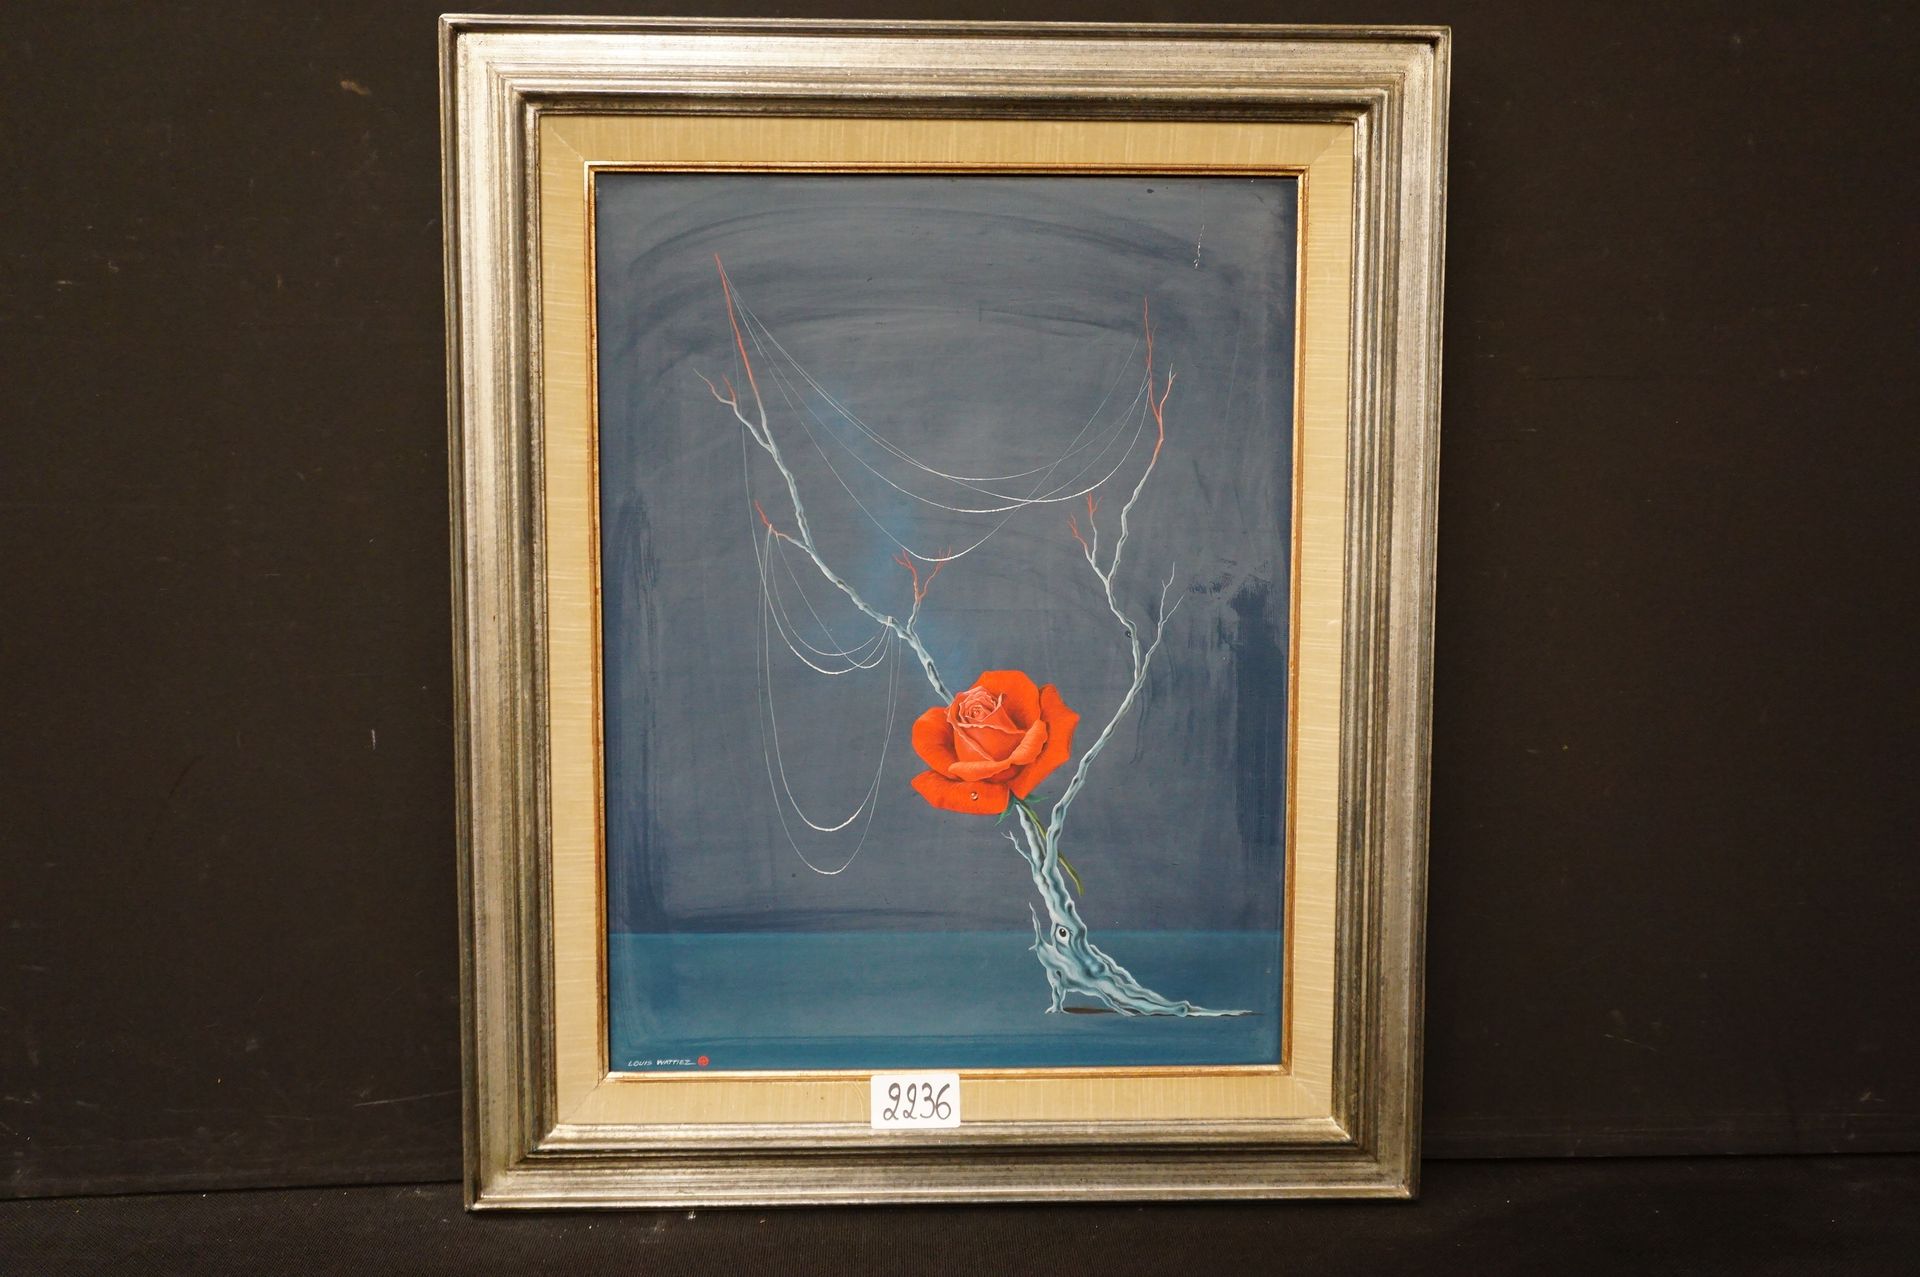 LOUIS WATTIEZ "La rose" - Óleo sobre lienzo - Firmado - 65 x 50 cm